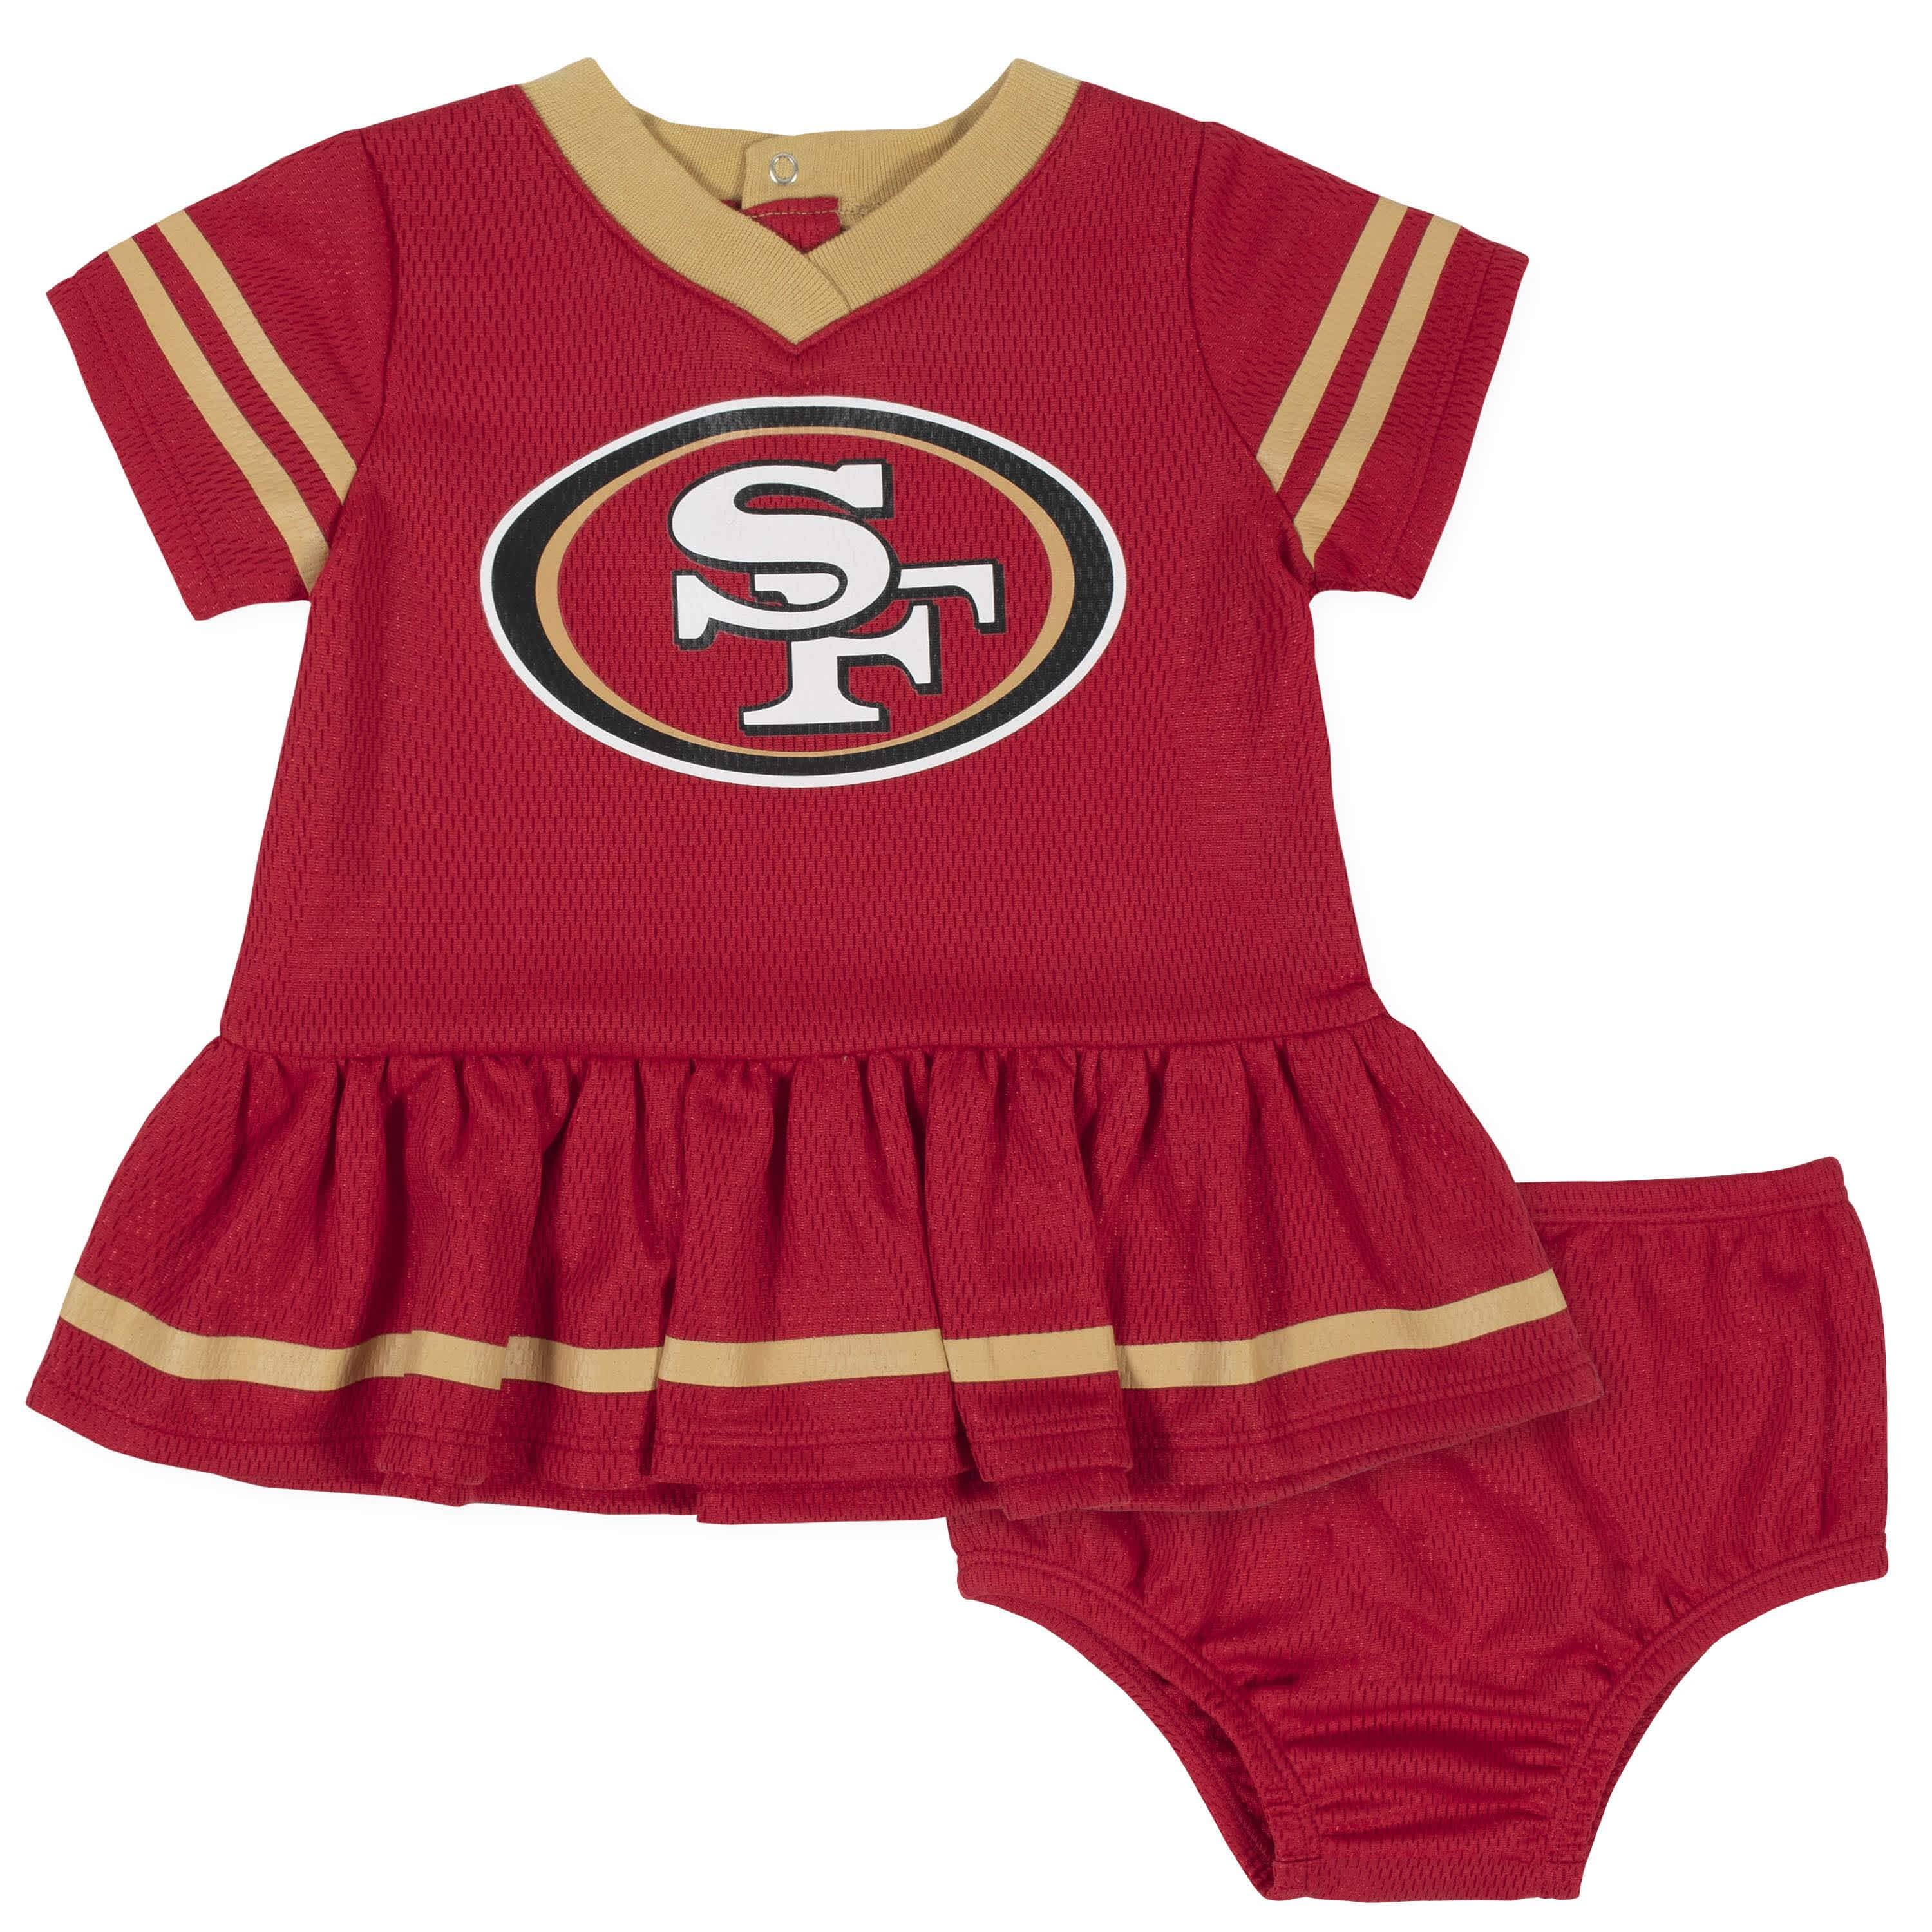 newborn 49ers jersey